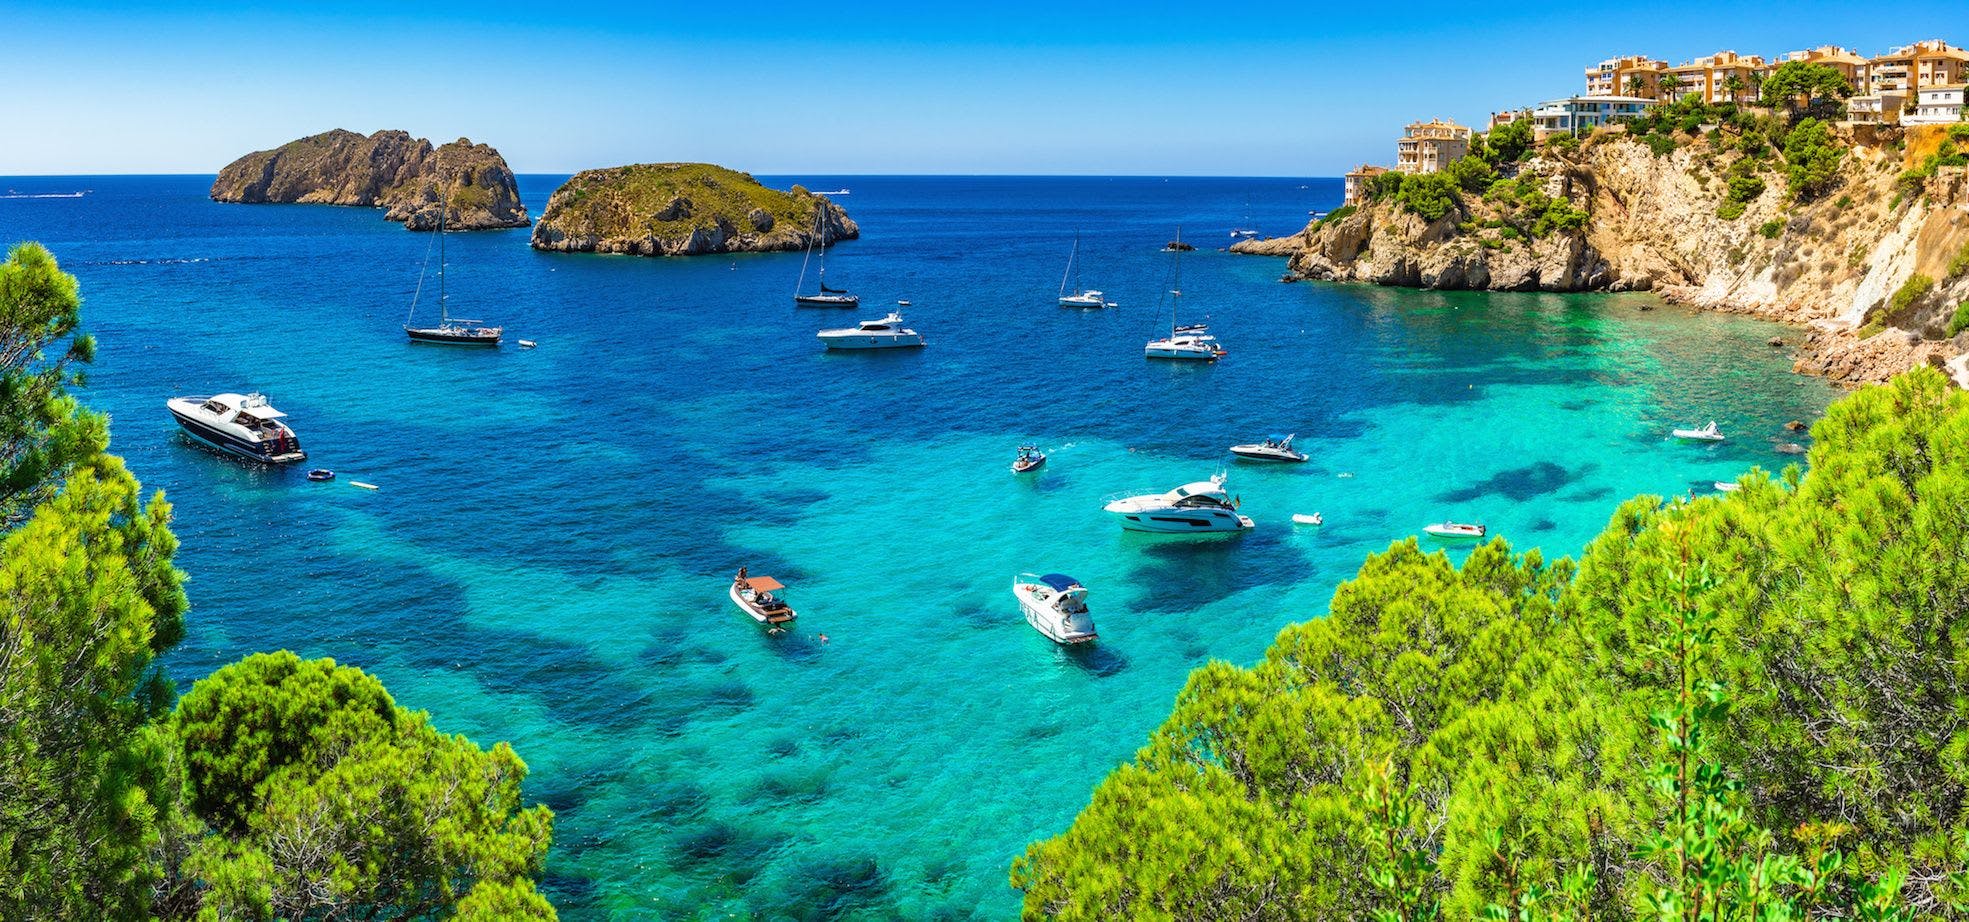 Best Beaches In Palma De Mallorca Near The Cruise Port preview image